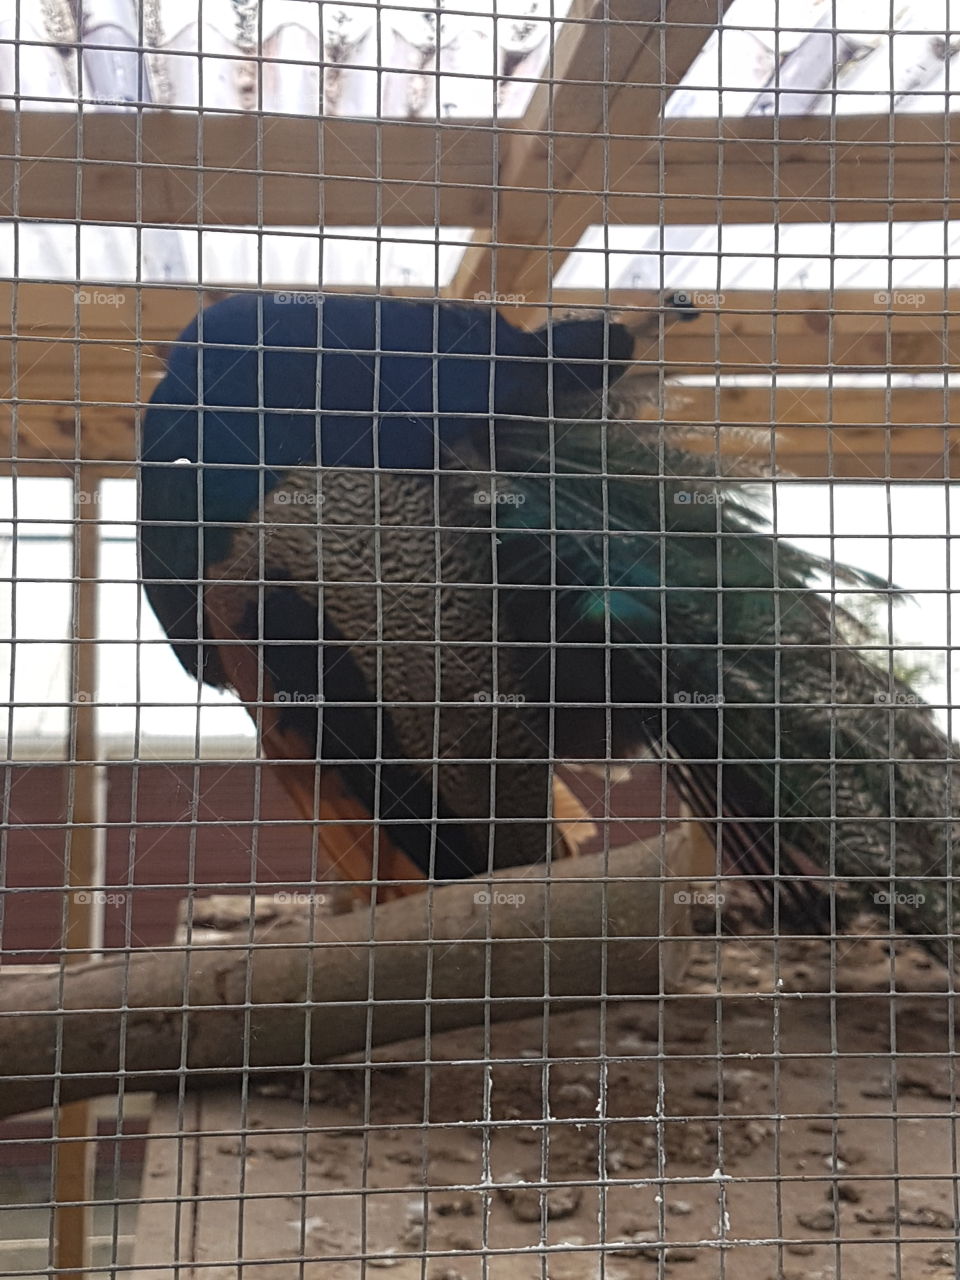 Peacock in enclosure